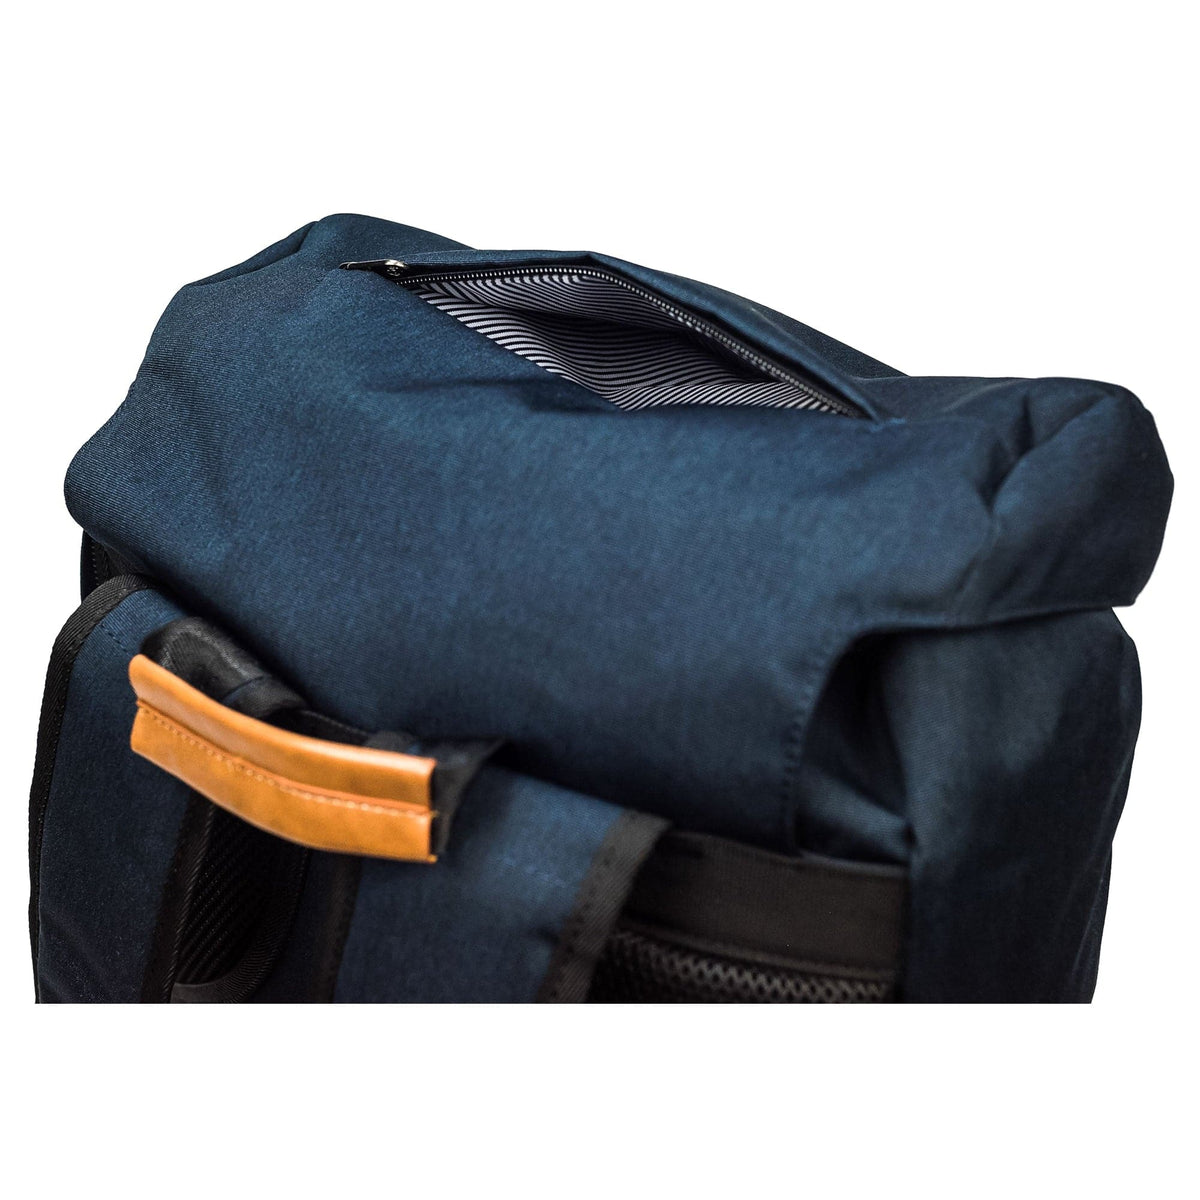 PKG Cambridge 15" Laptop Backpack